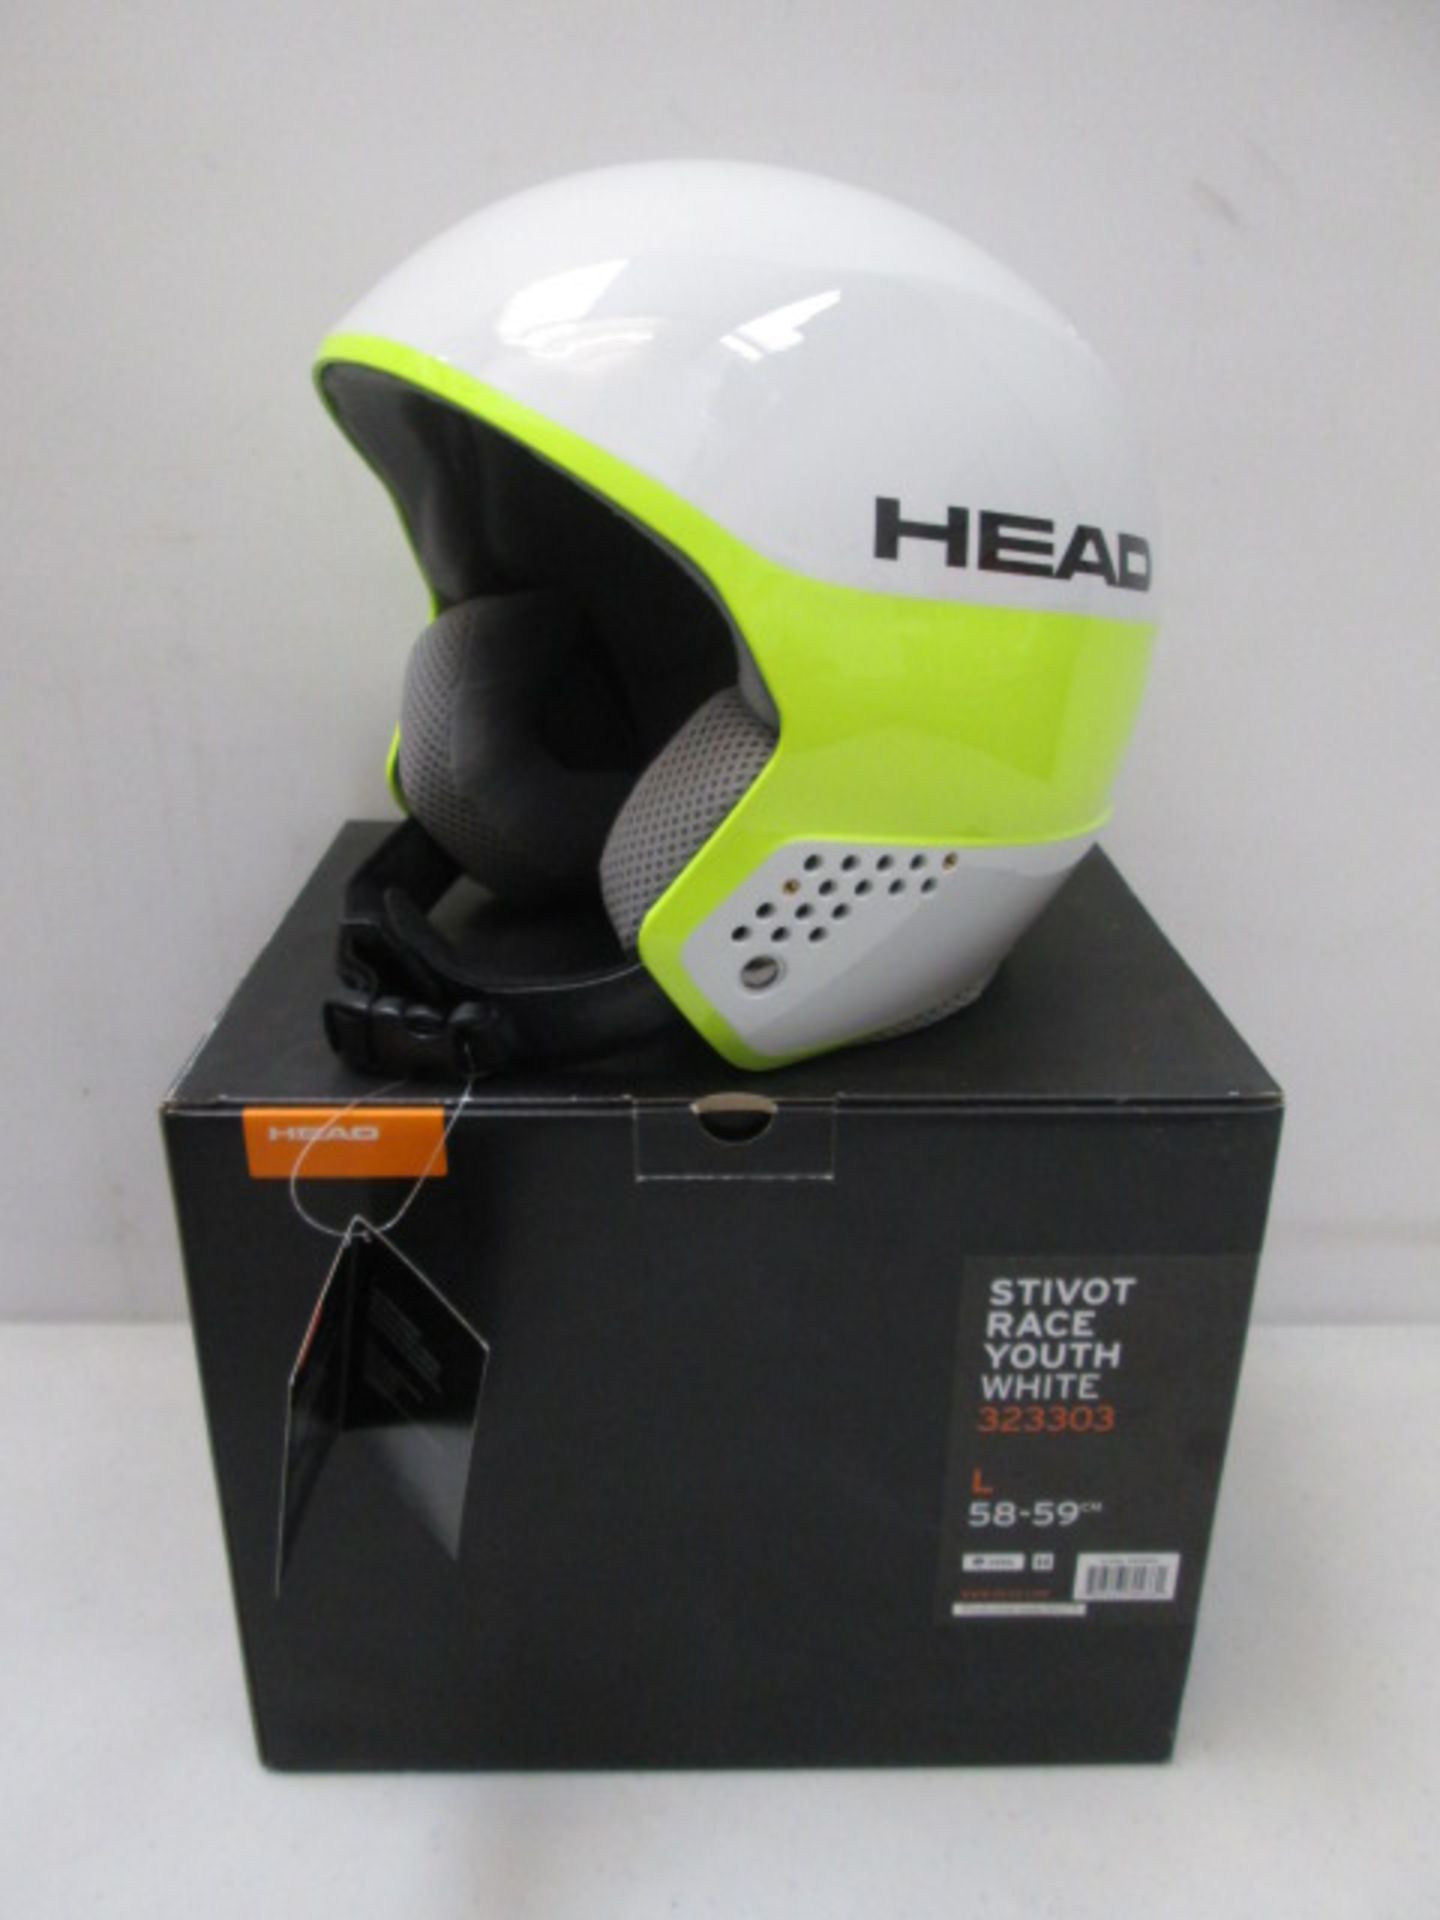 Head Stivot Race Youth Ski Helmet, White, Size L 58-59cm. RRP £40.00